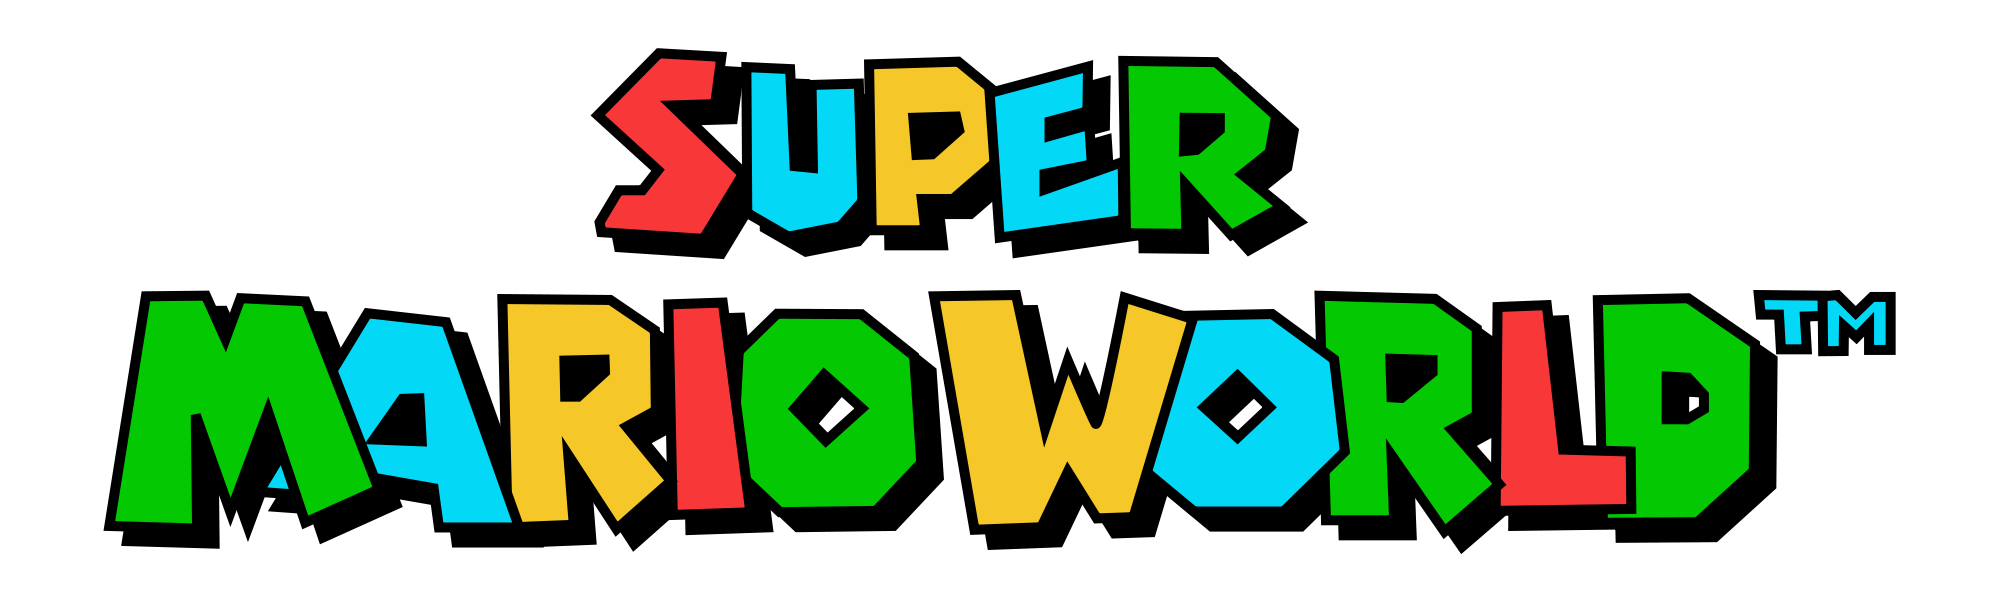 2000px-Super_Mario_World_game_logo.svg